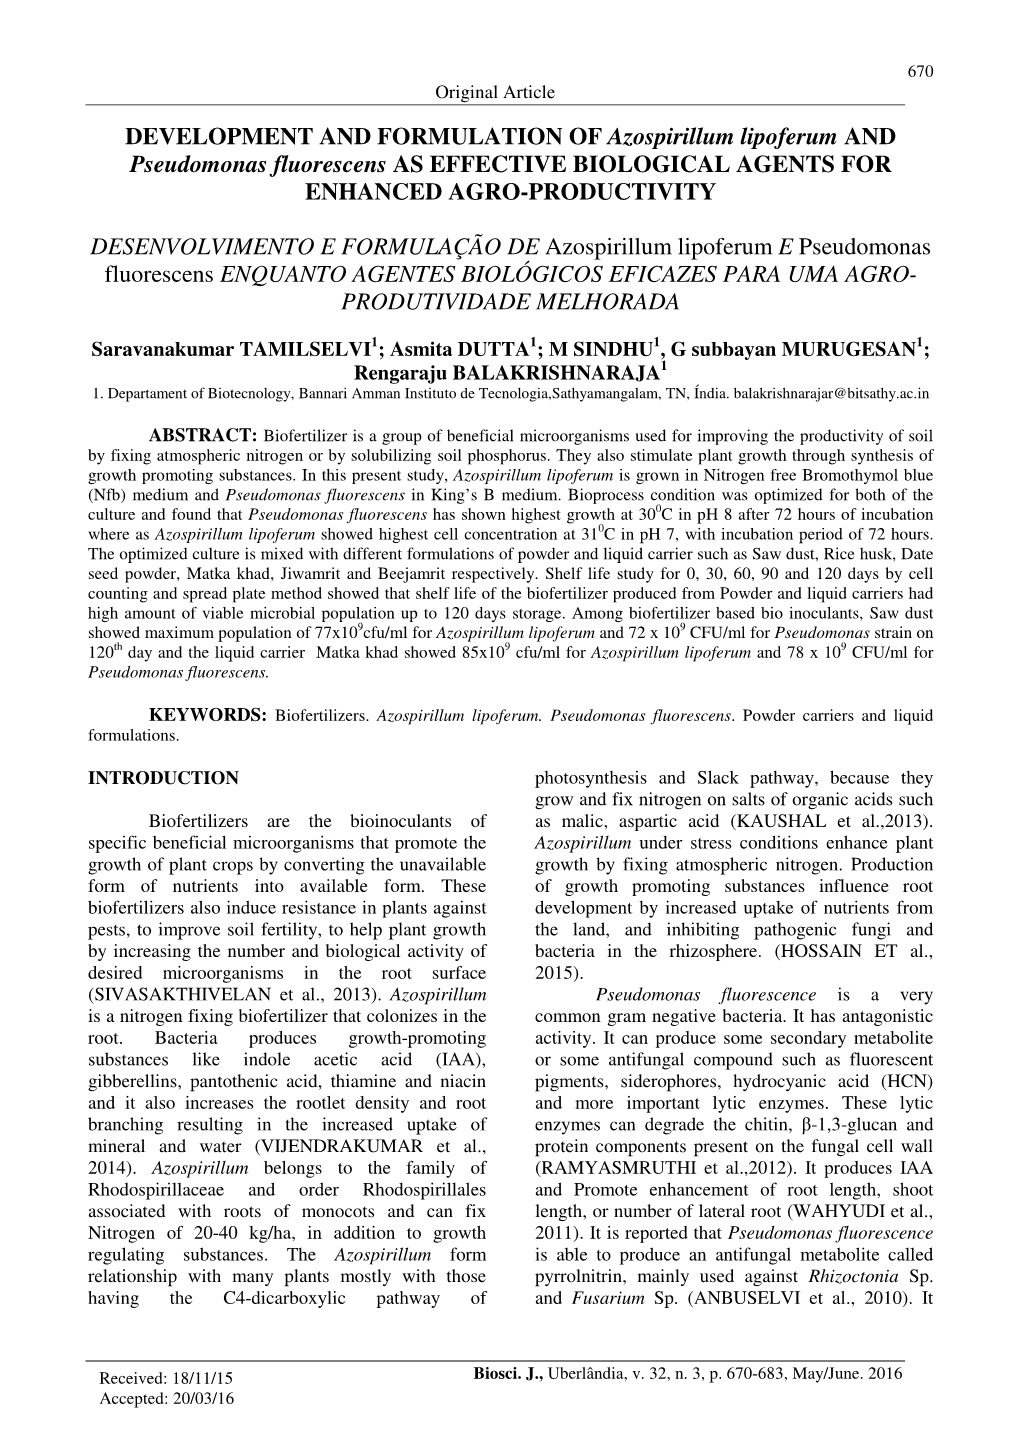 DEVELOPMENT and FORMULATION of Azospirillum Lipoferum and Pseudomonas Fluorescens AS EFFECTIVE BIOLOGICAL AGENTS for ENHANCED AGRO-PRODUCTIVITY